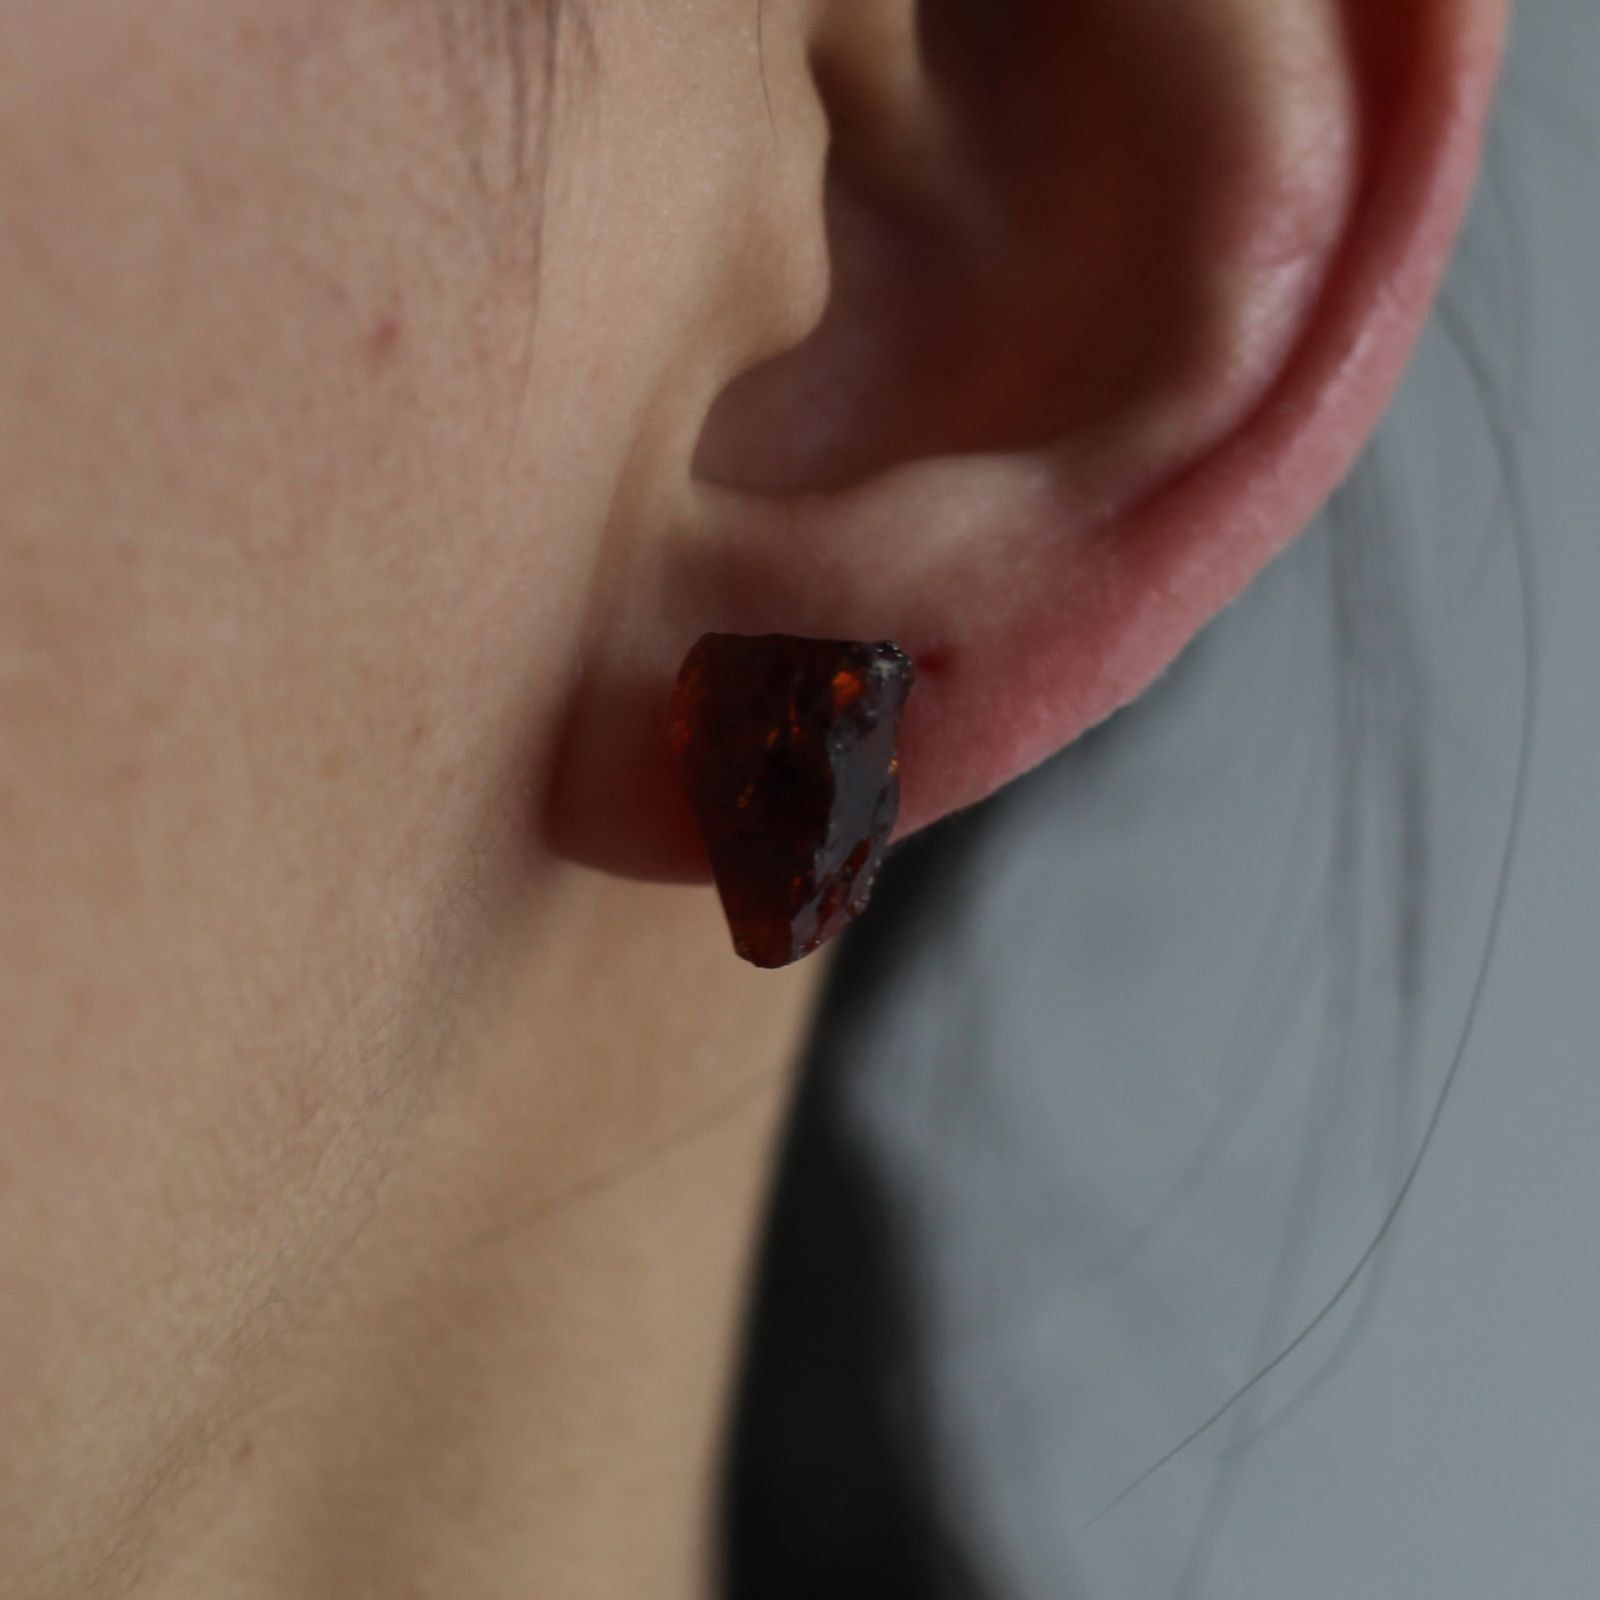 PREEK - 【残り一点】Rough Stone Garnet Earrings(両耳用） | ACRMTSM